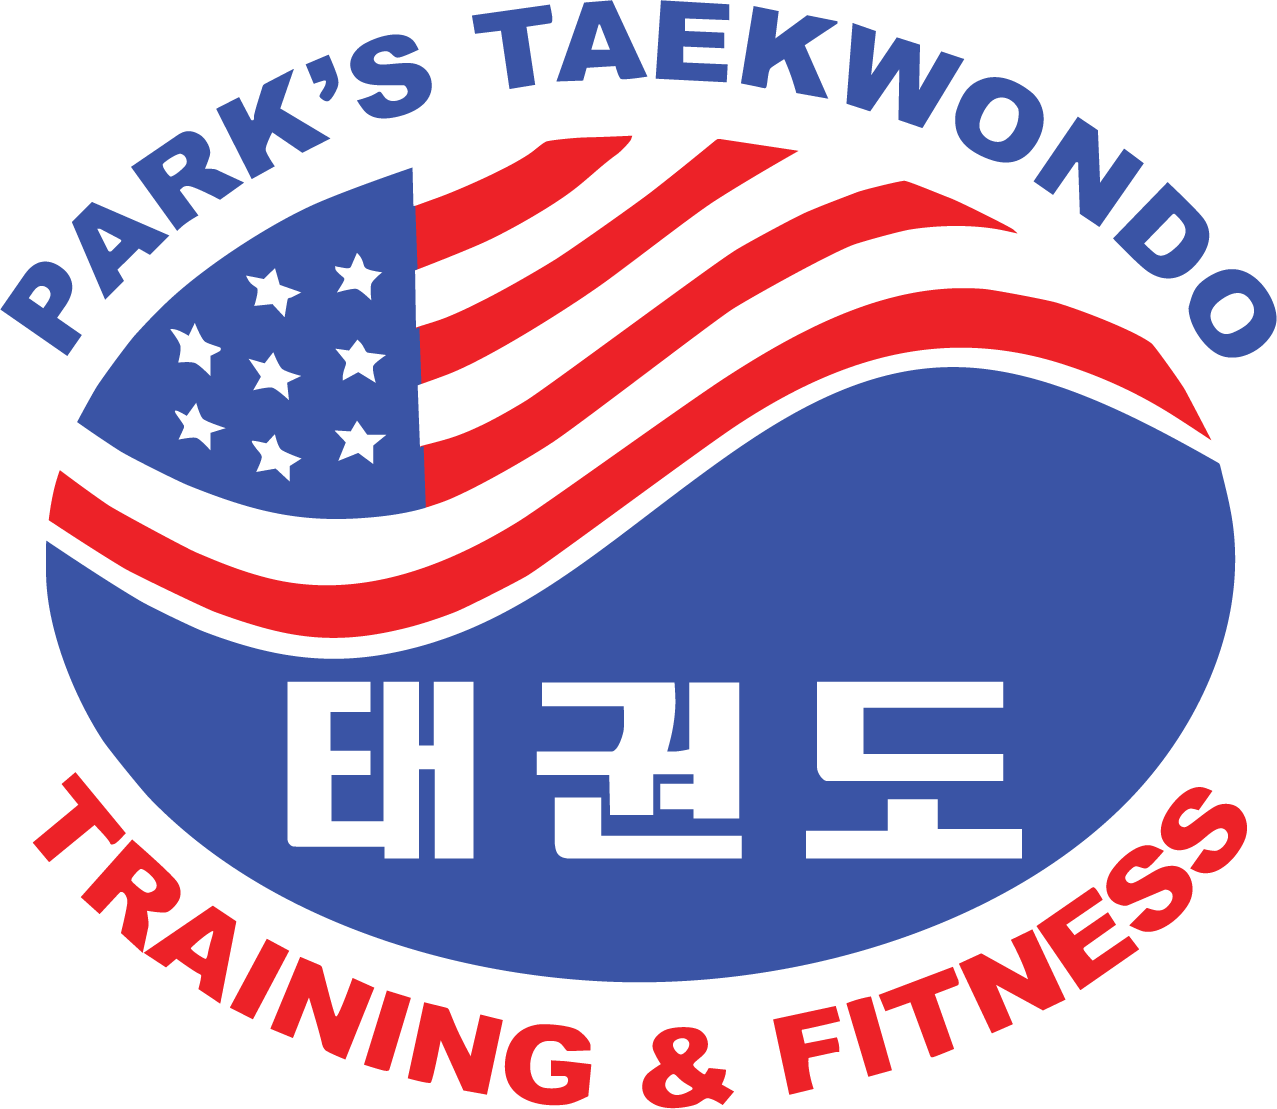 Park's Taekwondo Training & Fitness